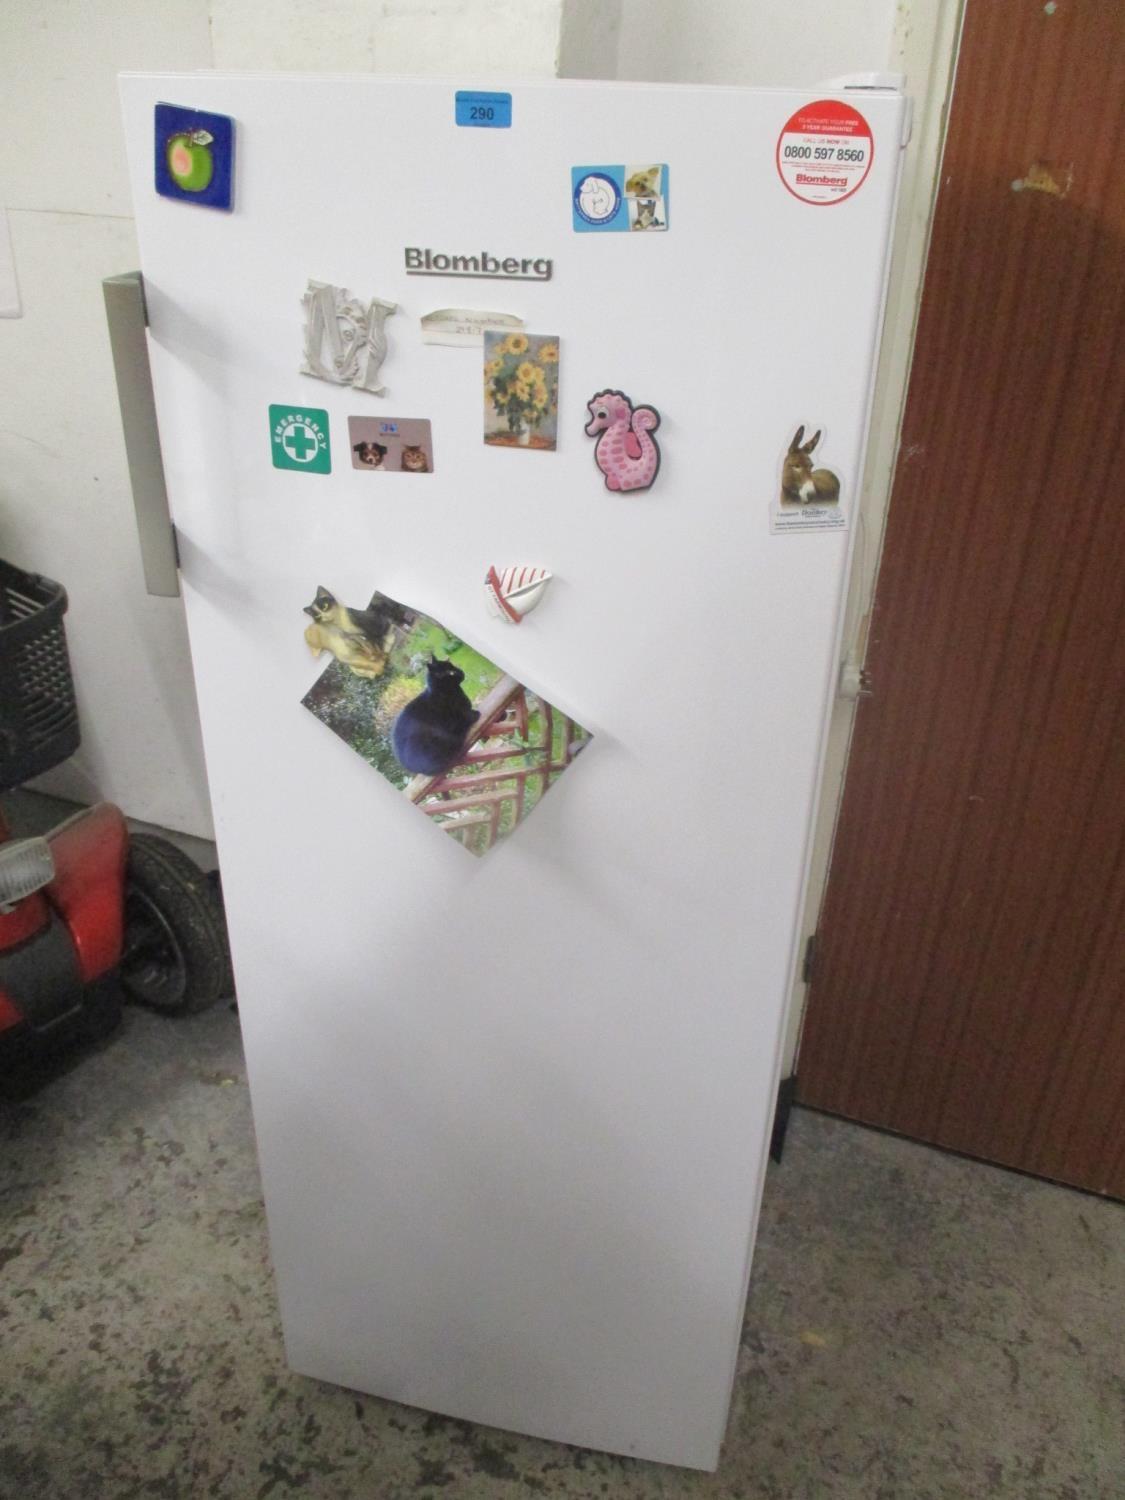 A Blomberg fridge